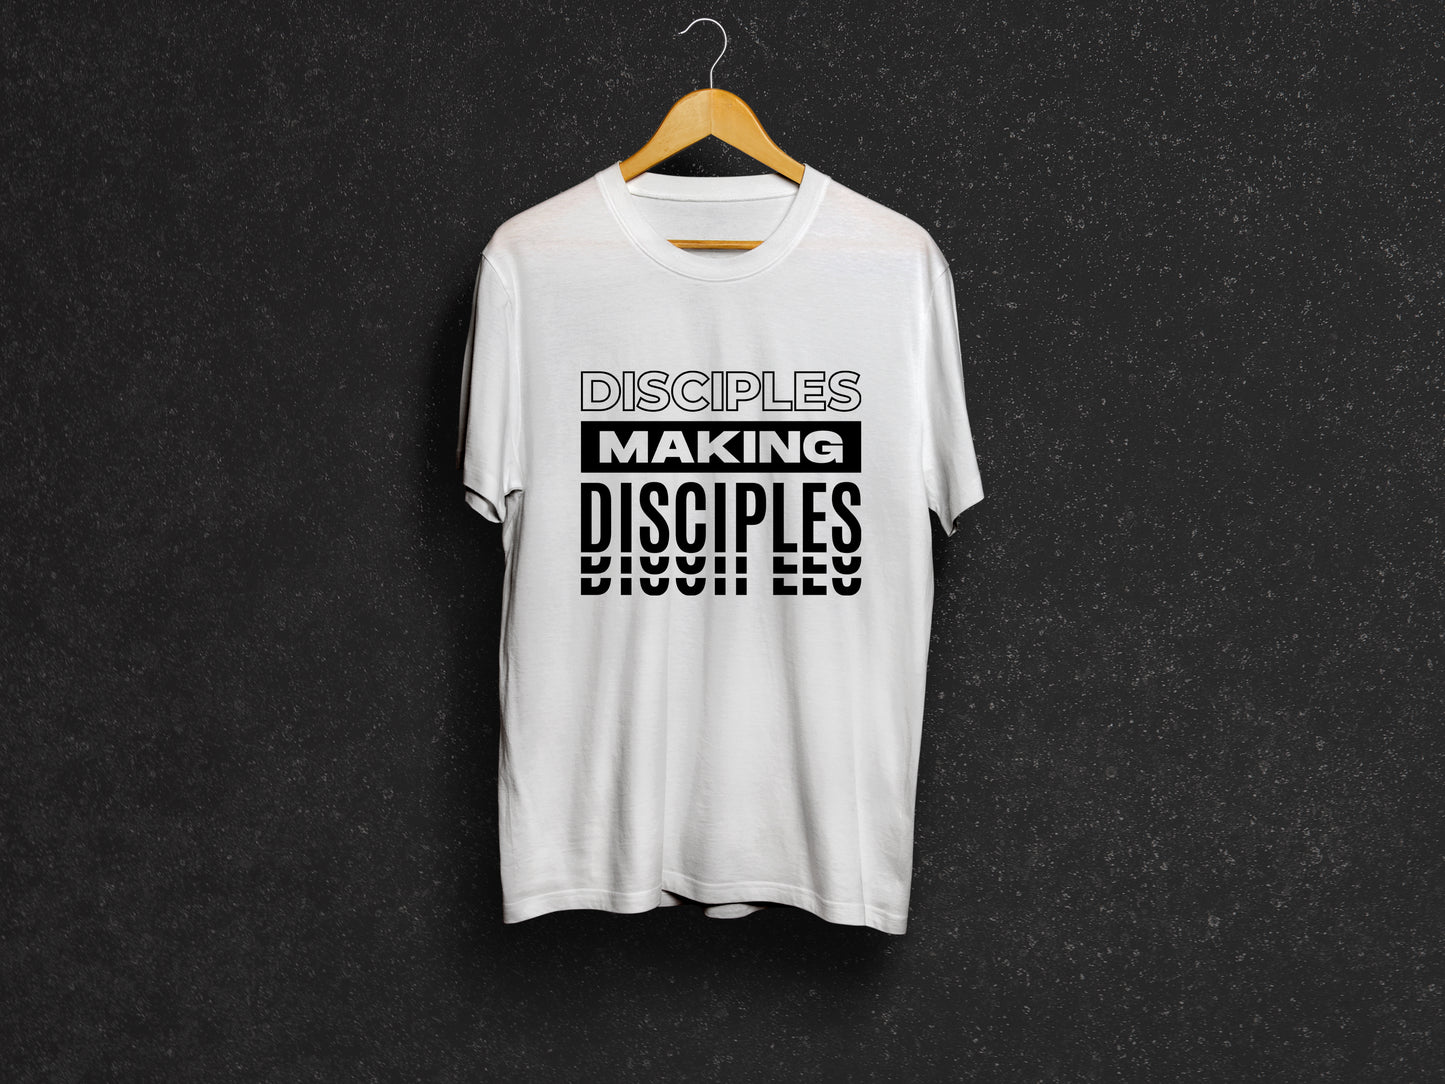 Disciples making Disciples